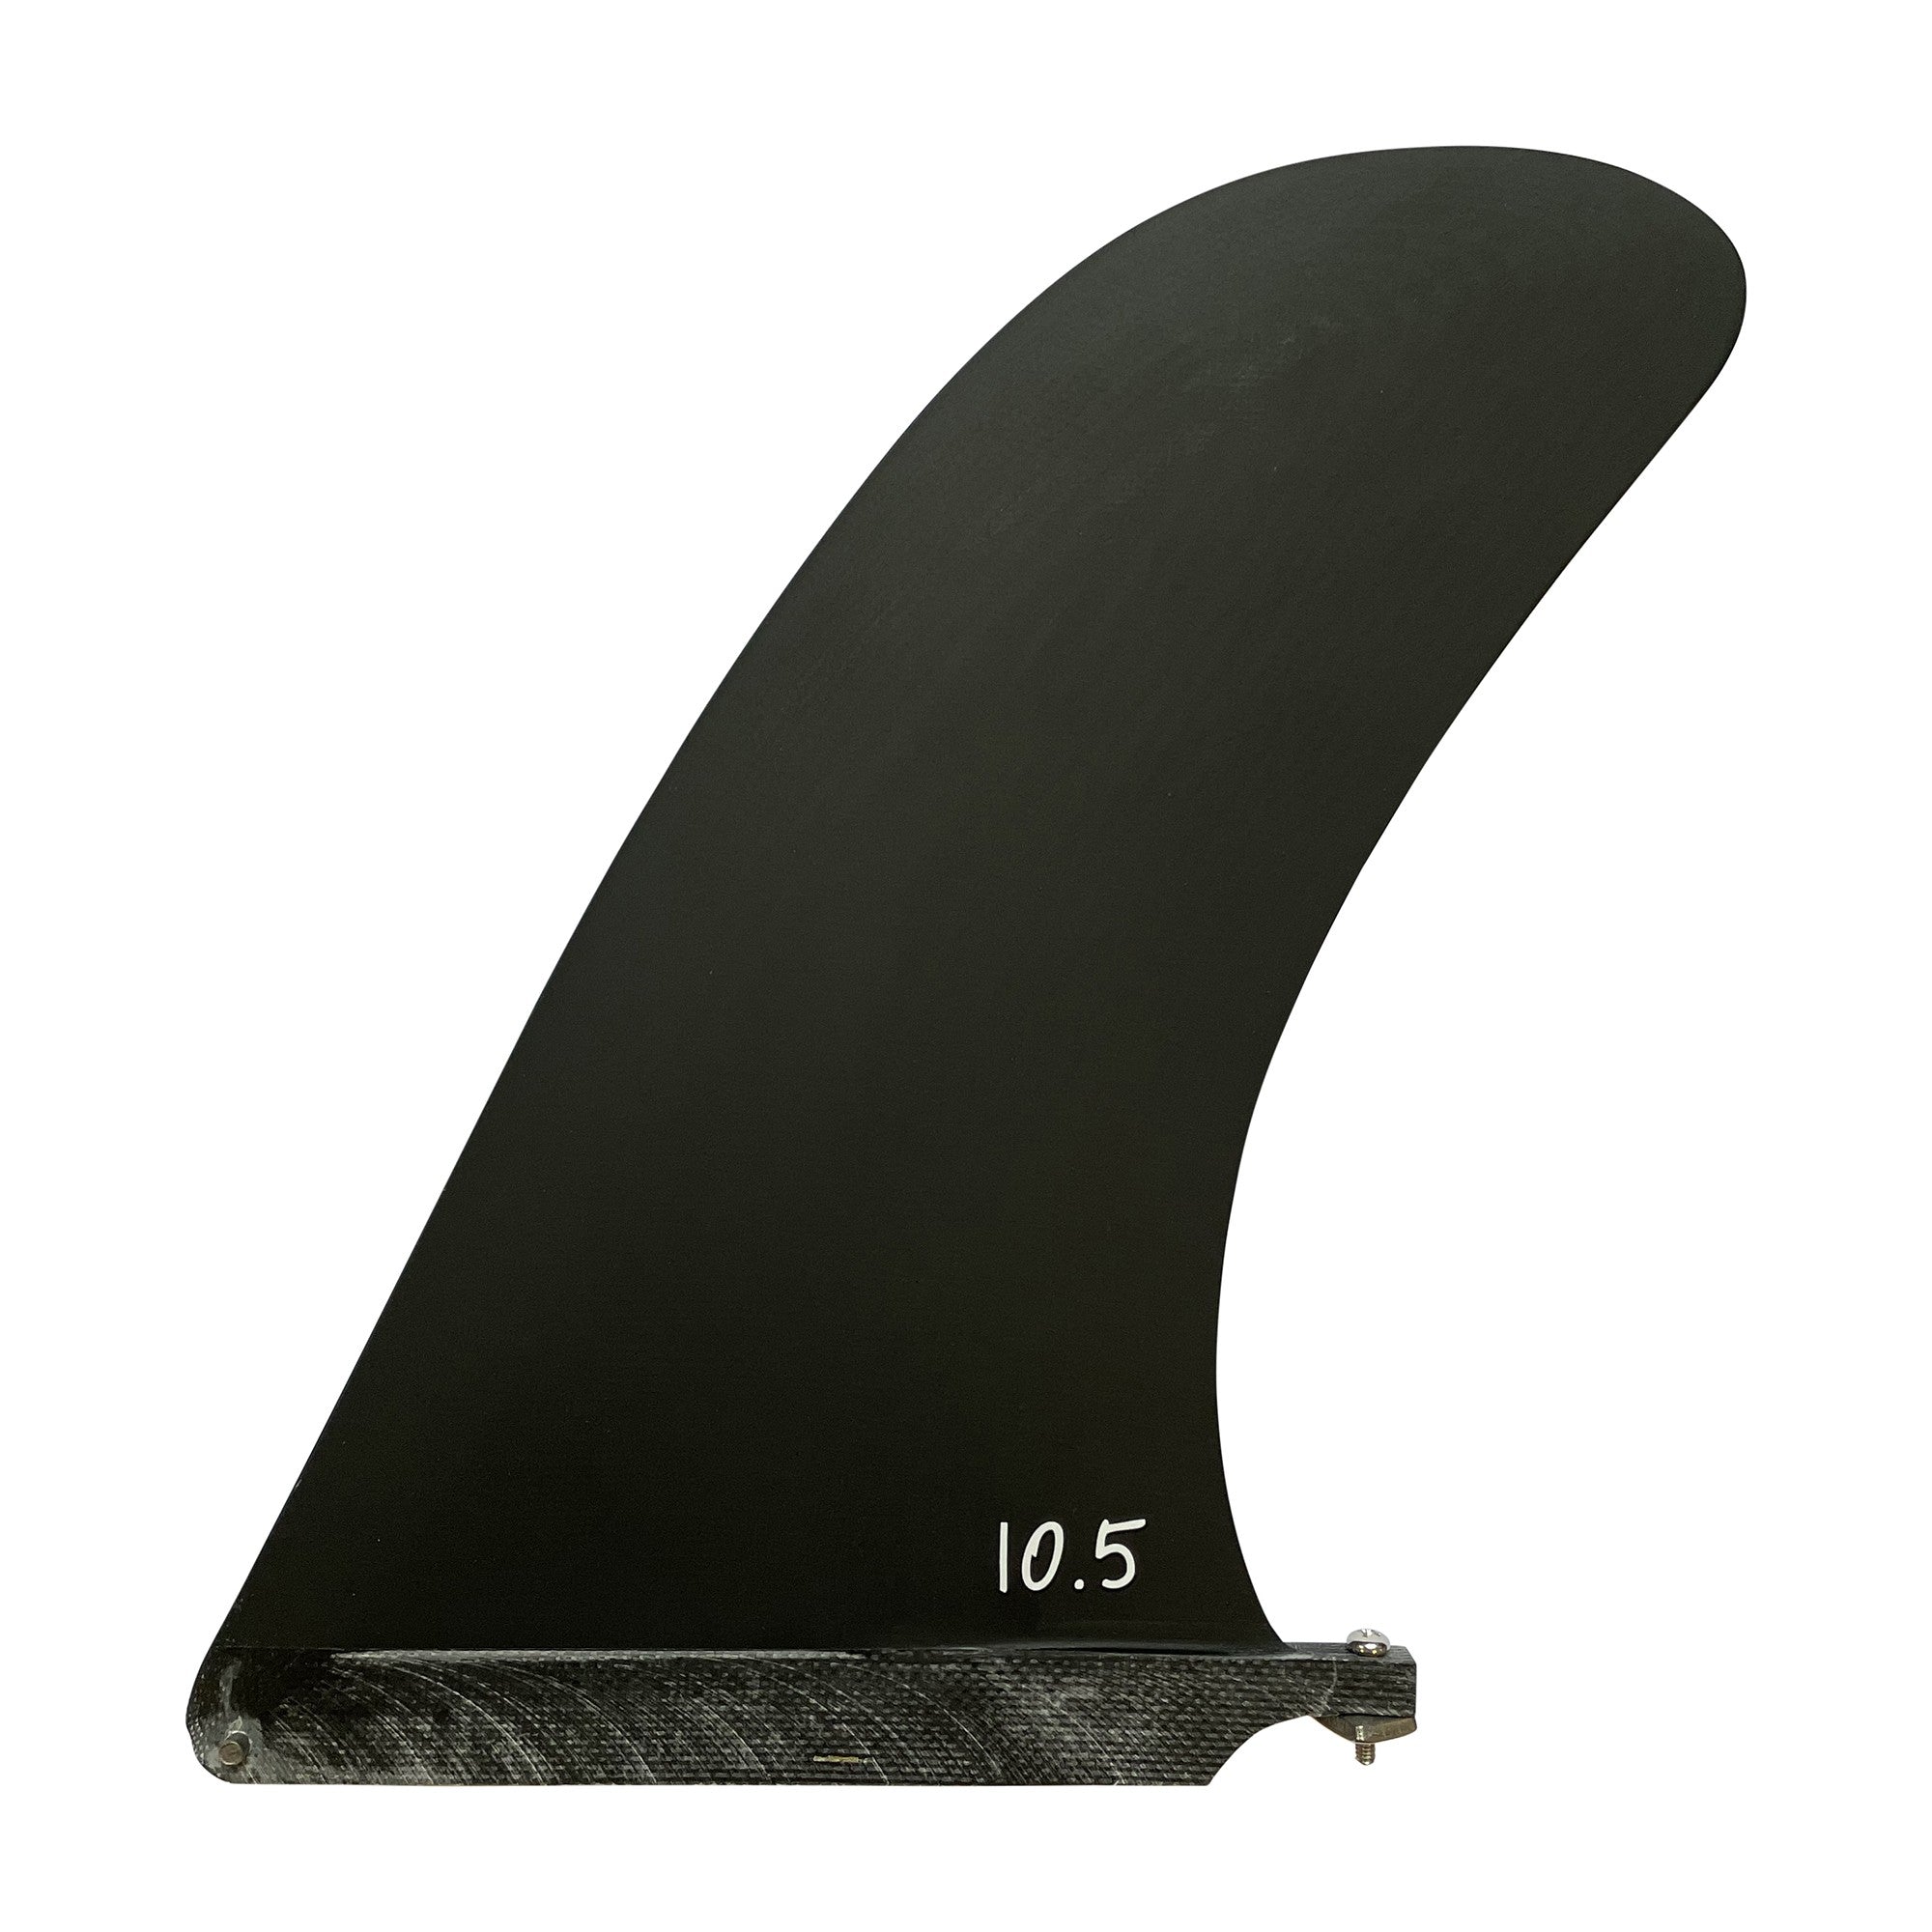 SISTEMA DE SURF - Aleta única de fibra de vidrio de 10,5 pivotes (caja de EE. UU.) - Negro